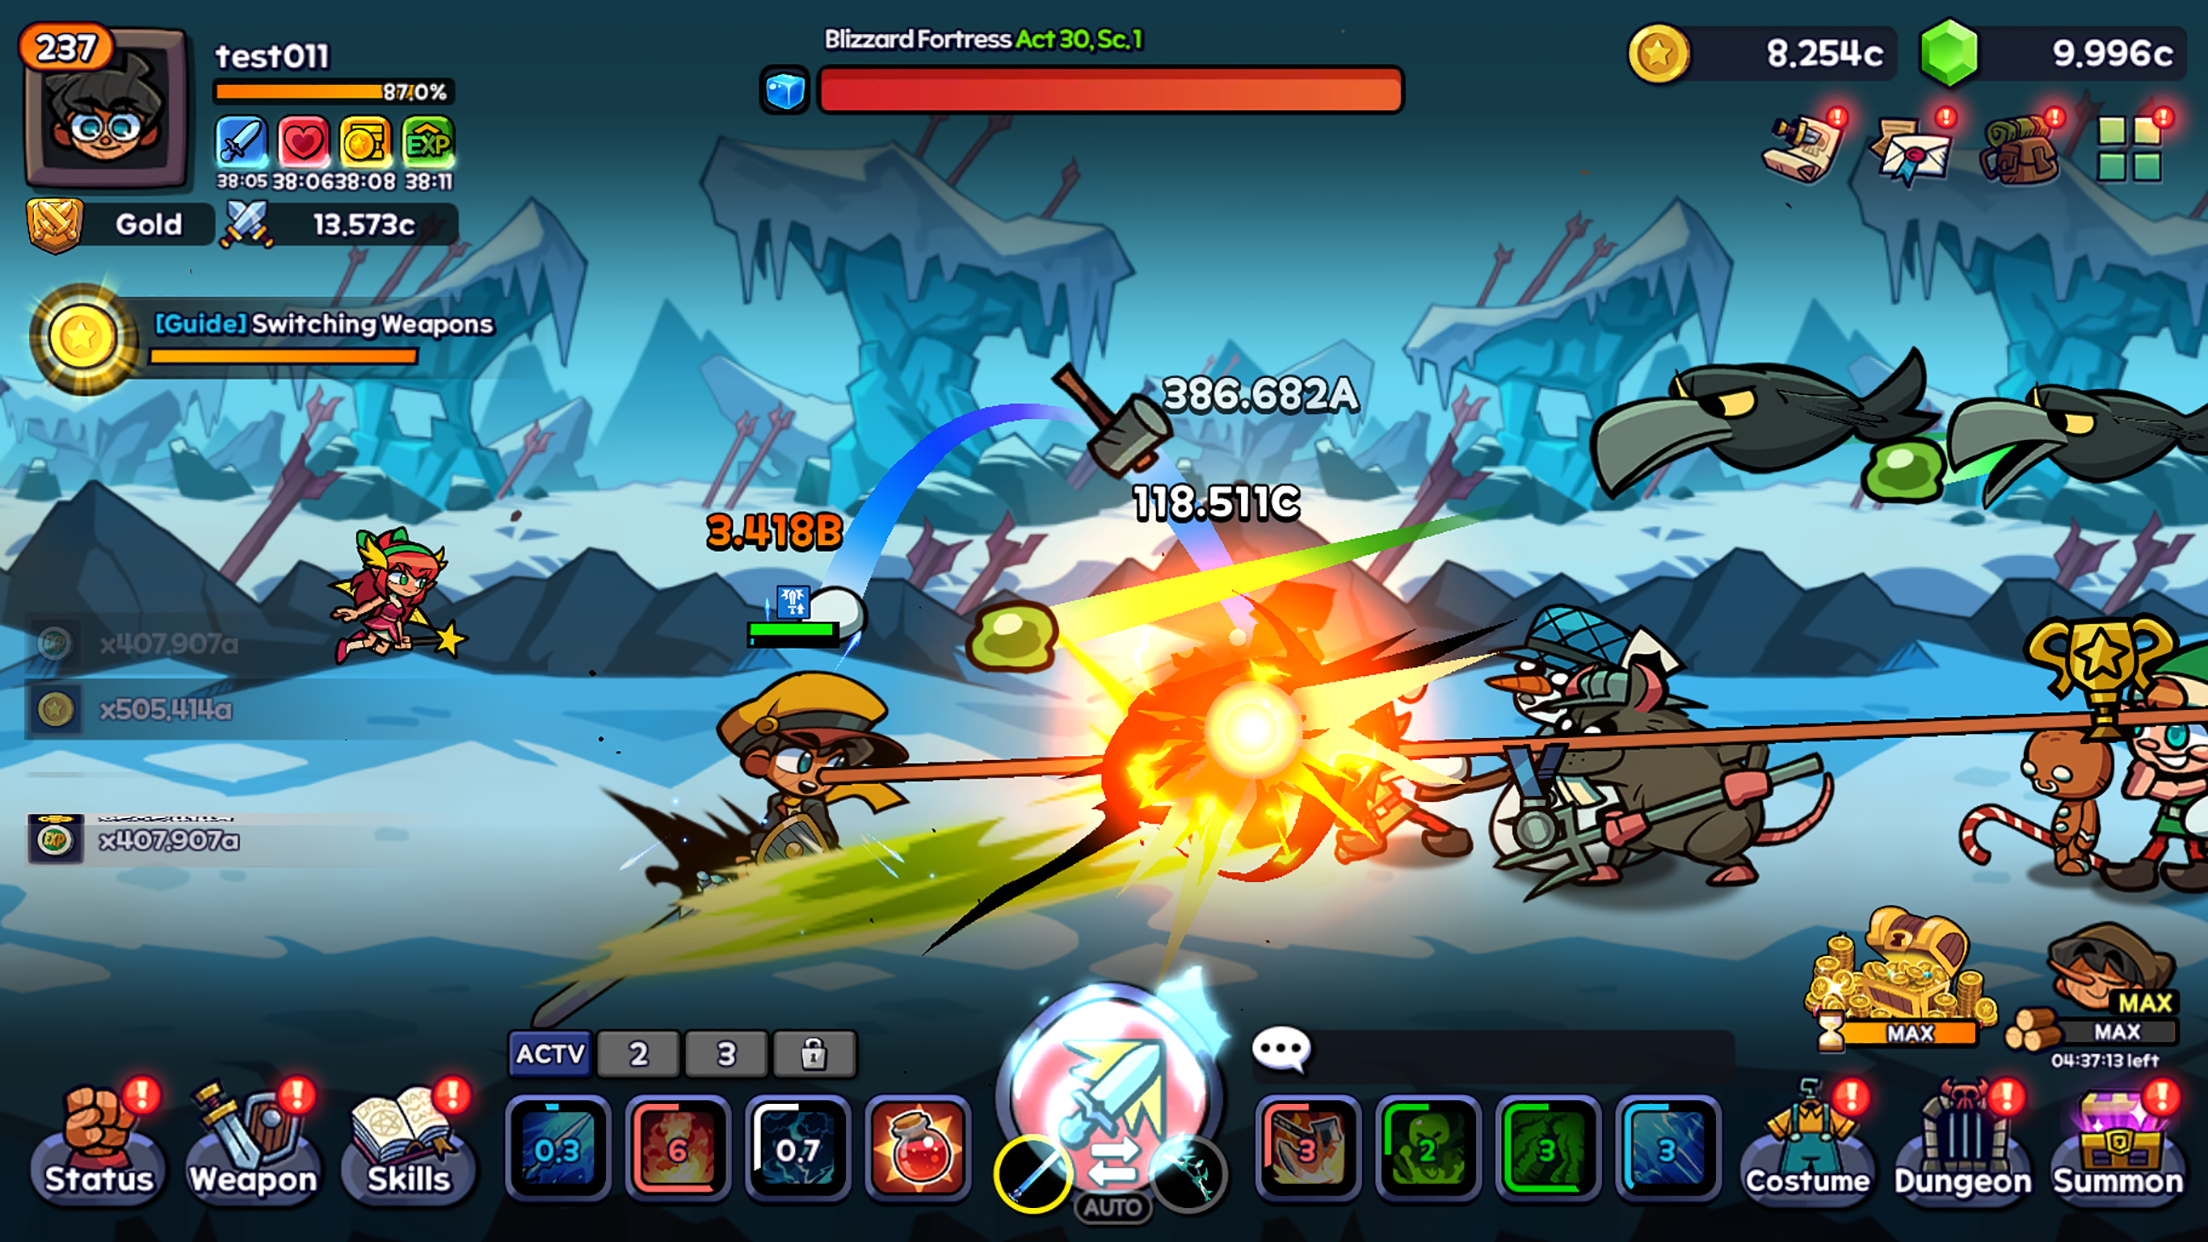 Super Marionette Hero screenshot game